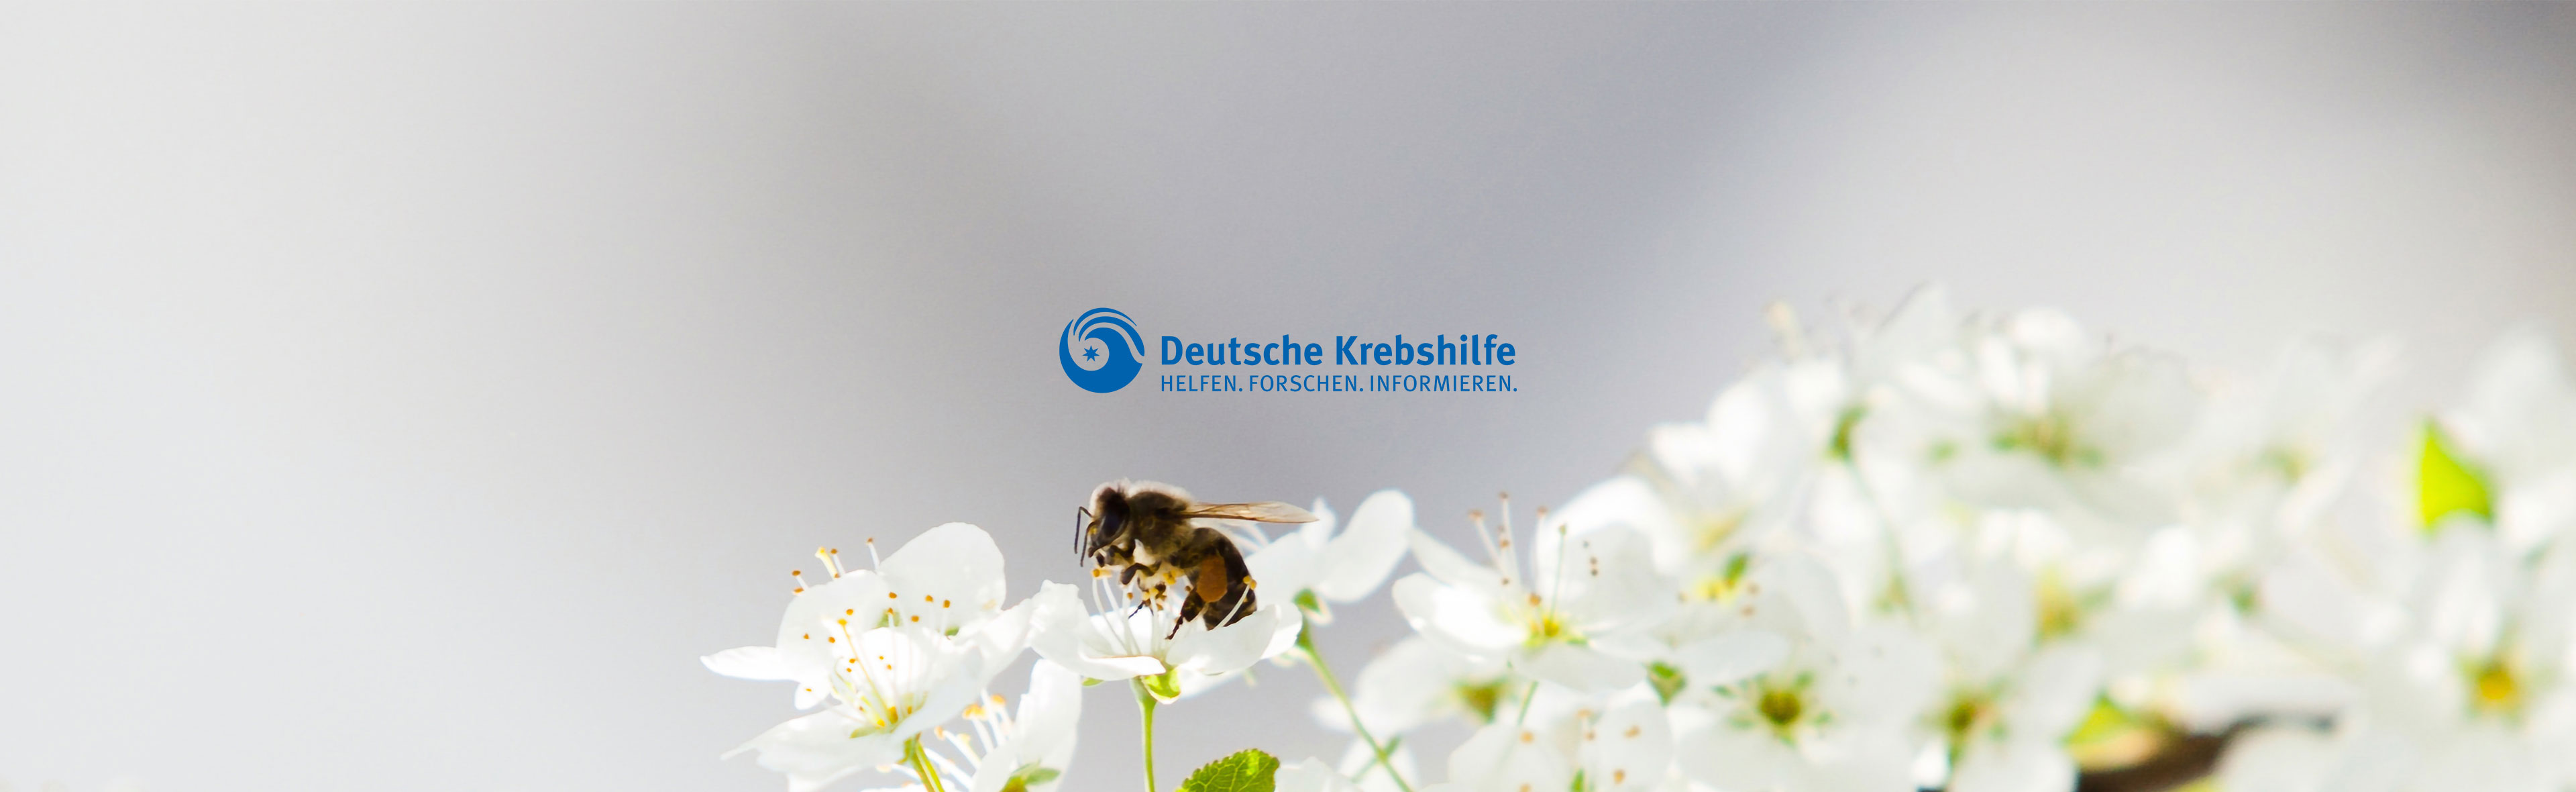 Bee Sponsorship Deutsche Krebshilfe